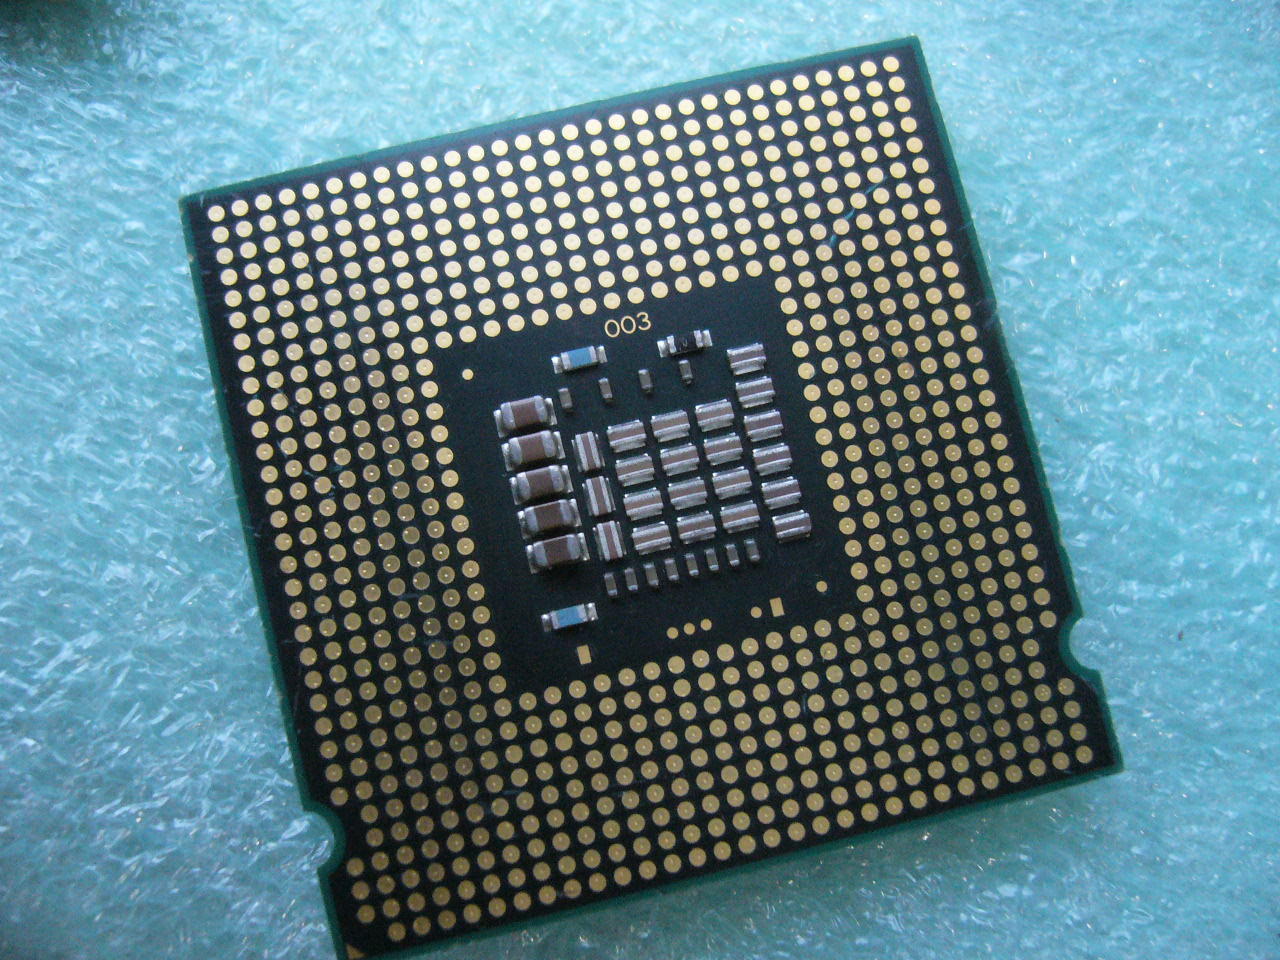 QTY 1x INTEL Core 2 Duo E8200 CPU 2.66GHz 6MB/1333Mhz LGA775 SLAPP - Click Image to Close